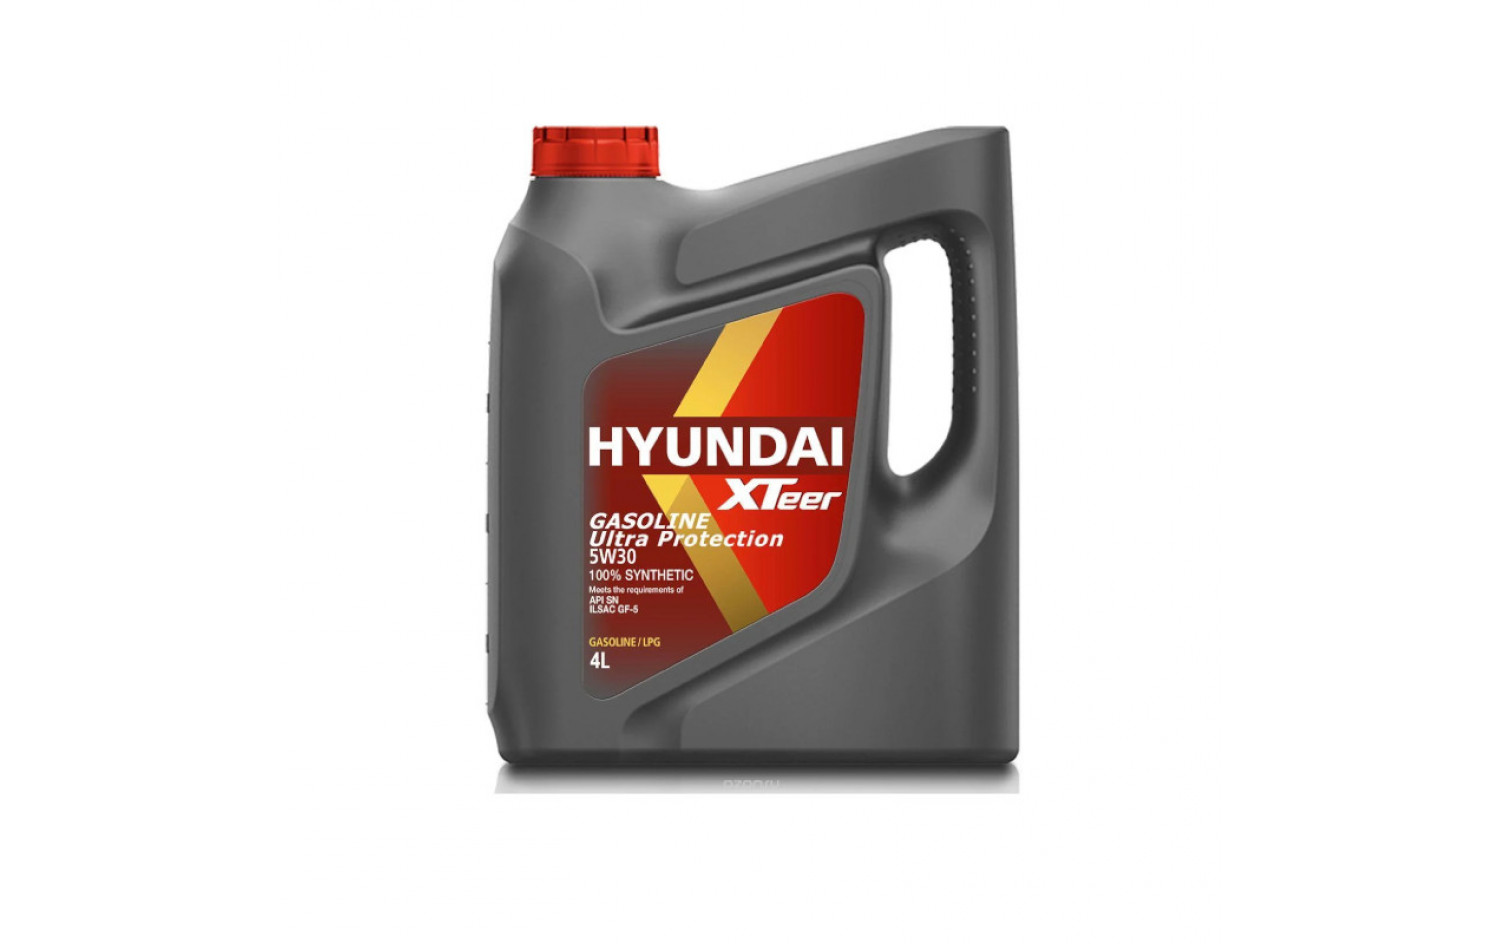 Икс тир масло. Моторное масло синтетическое gasoline Ultra Protection 5w30 6 л Hyundai XTEER. 1041002 Hyundai XTEER. 1041017 Hyundai XTEER. 1041135 Hyundai XTEER.